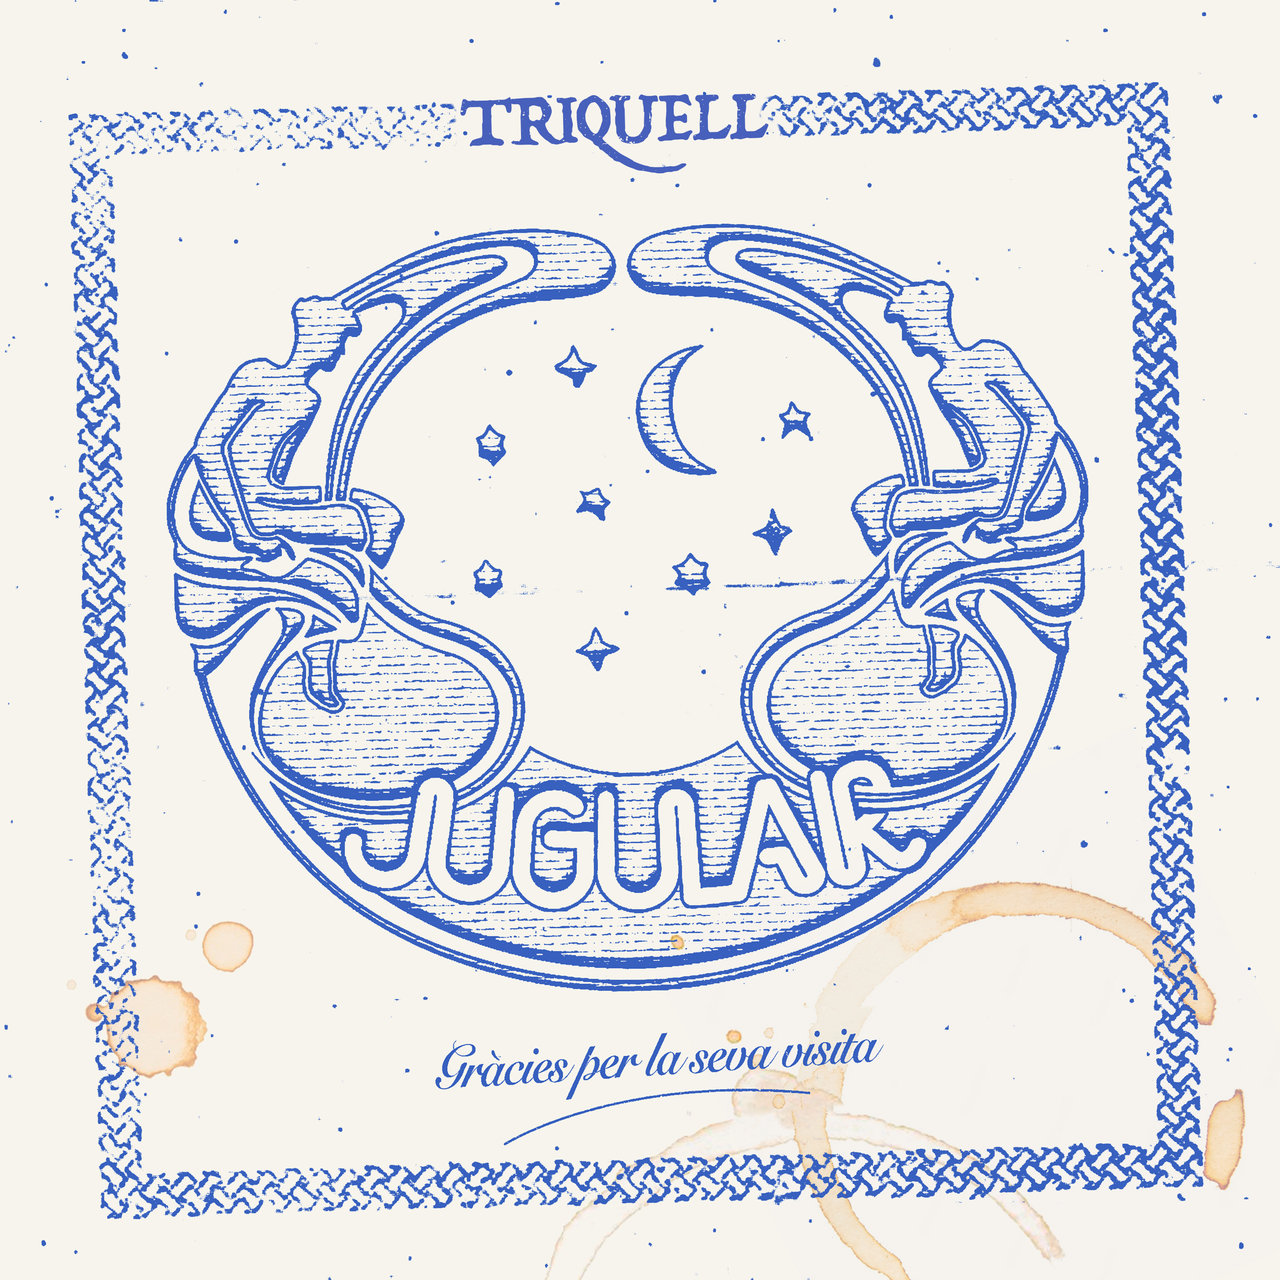 Triquell Jugular cover artwork